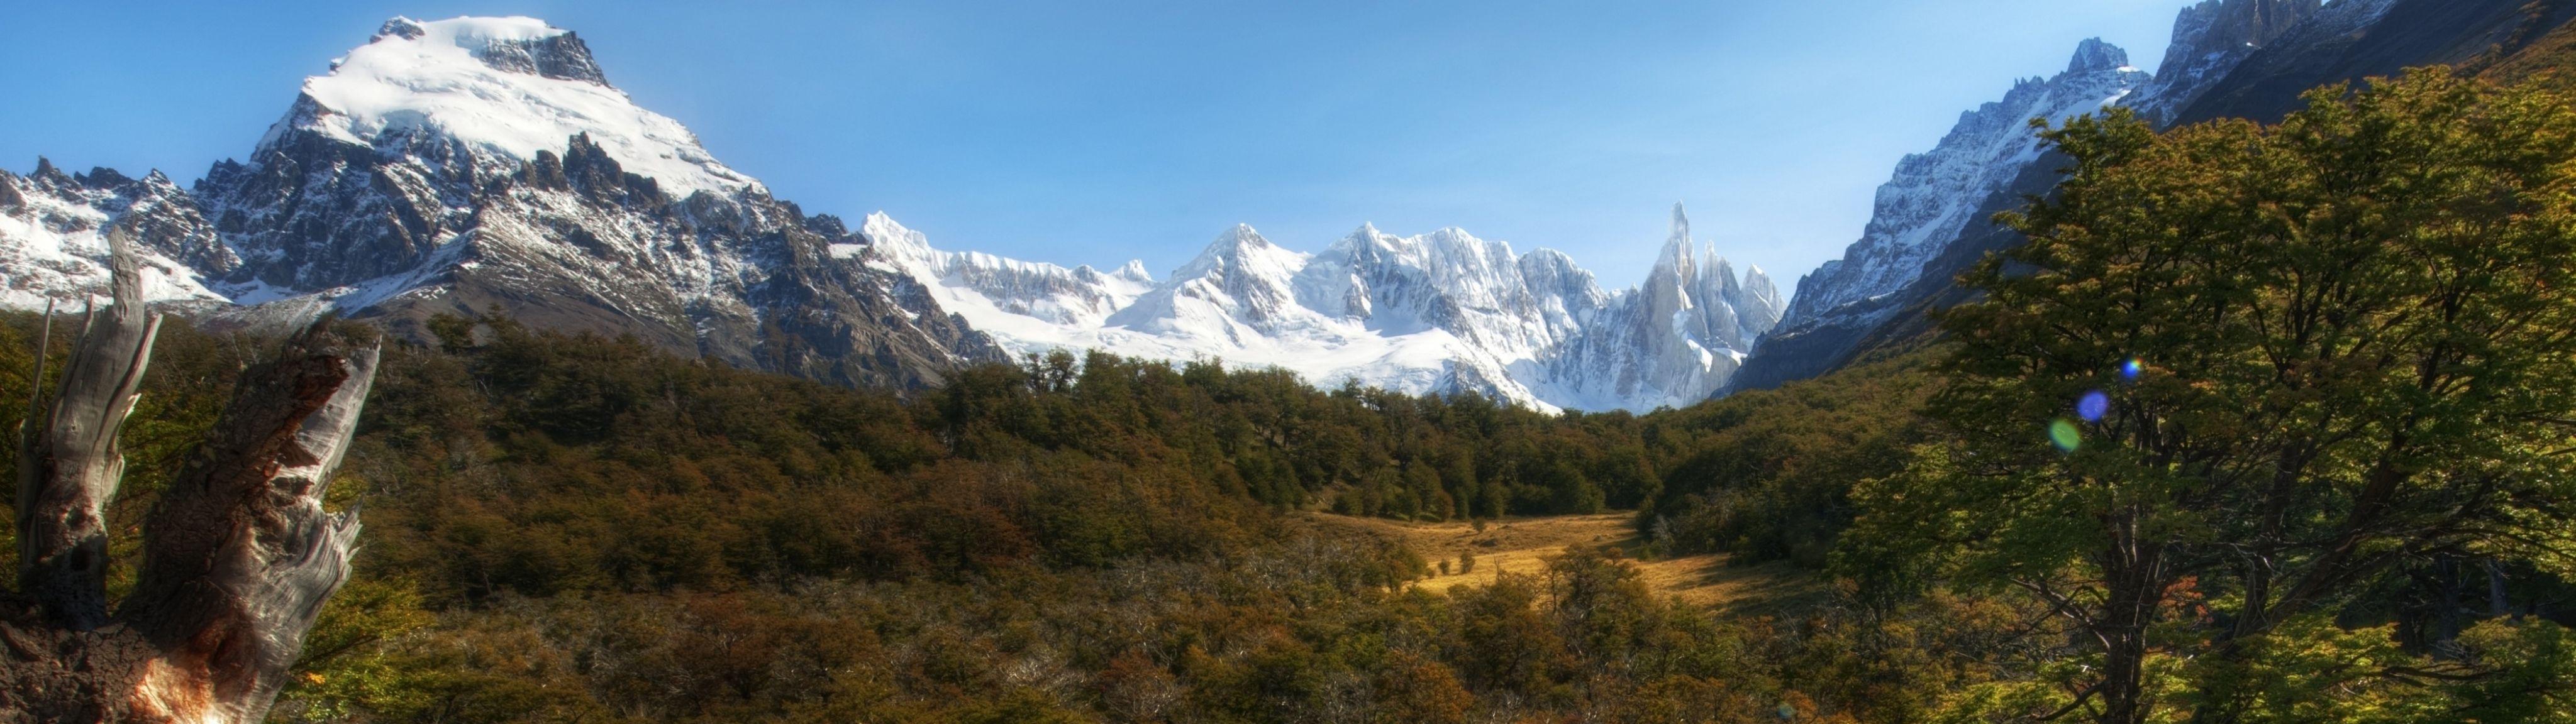 Andes Mountains, Patagonia, Argentina Desktop Background Wallpaper